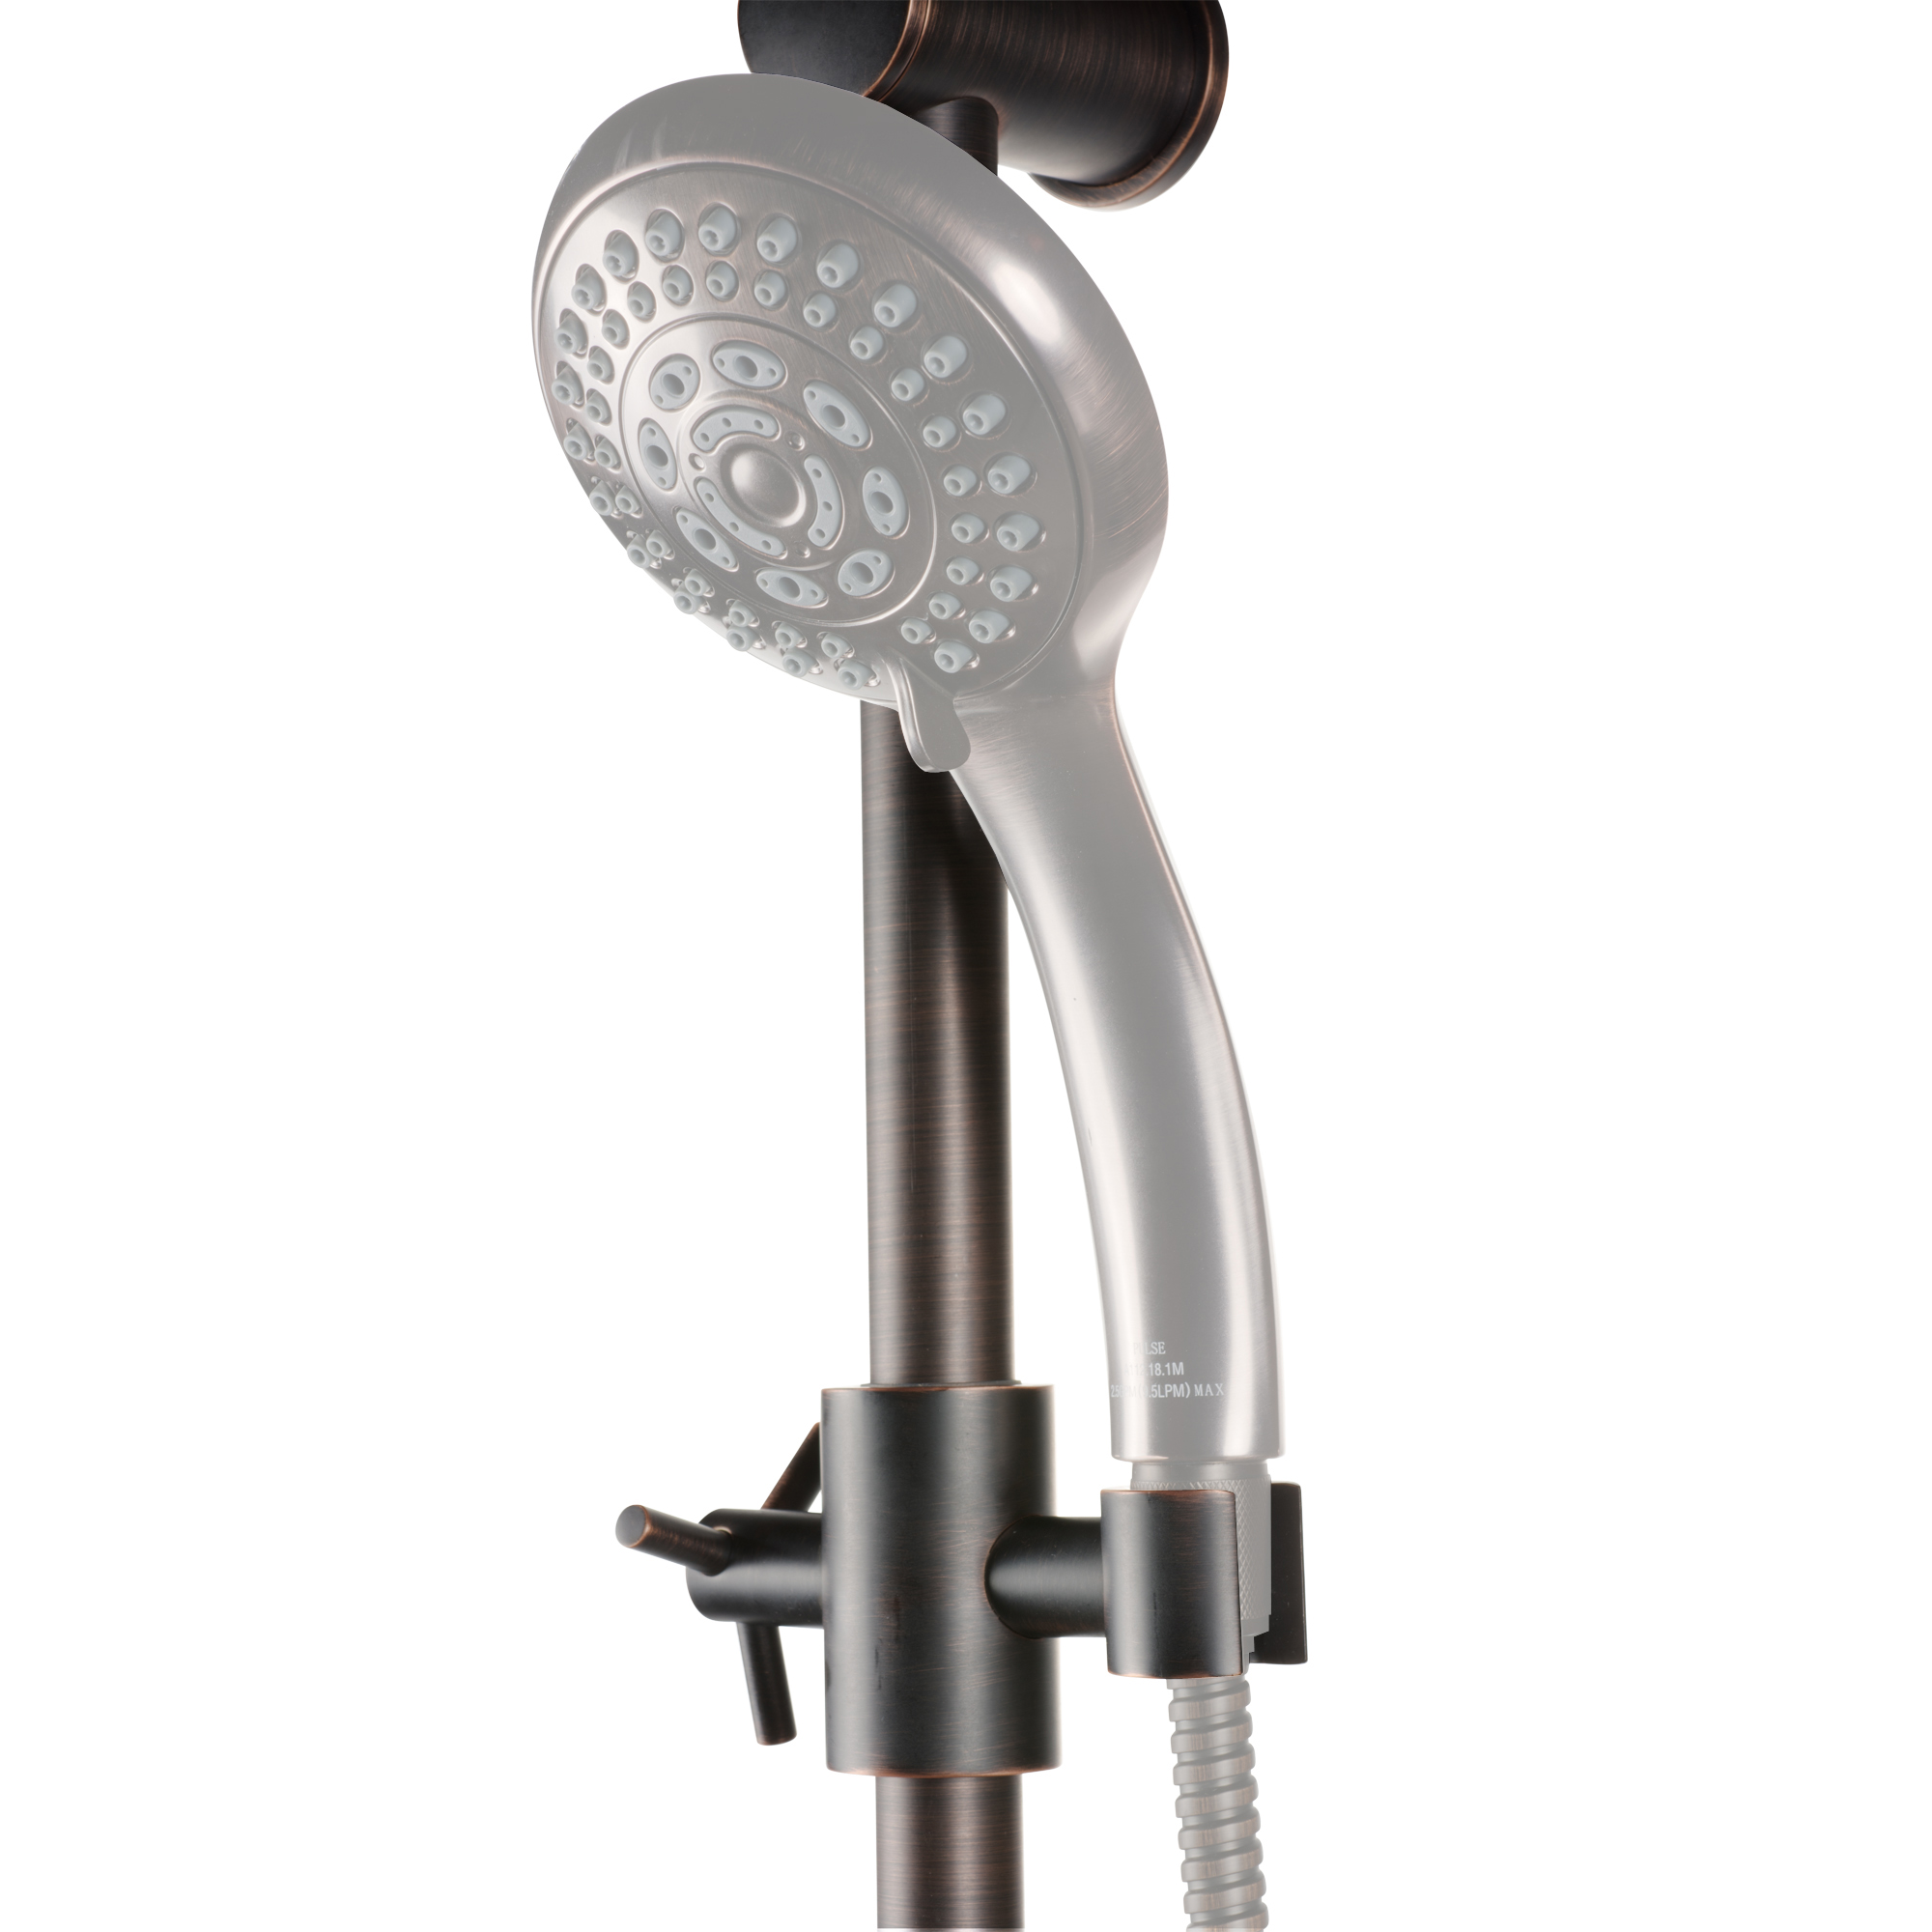 PULSE ShowerSpas 1010-ORB Adjustable Slide Bar for Hand Shower with Wire Basket Soap Dish Oil Rubbed Bronze